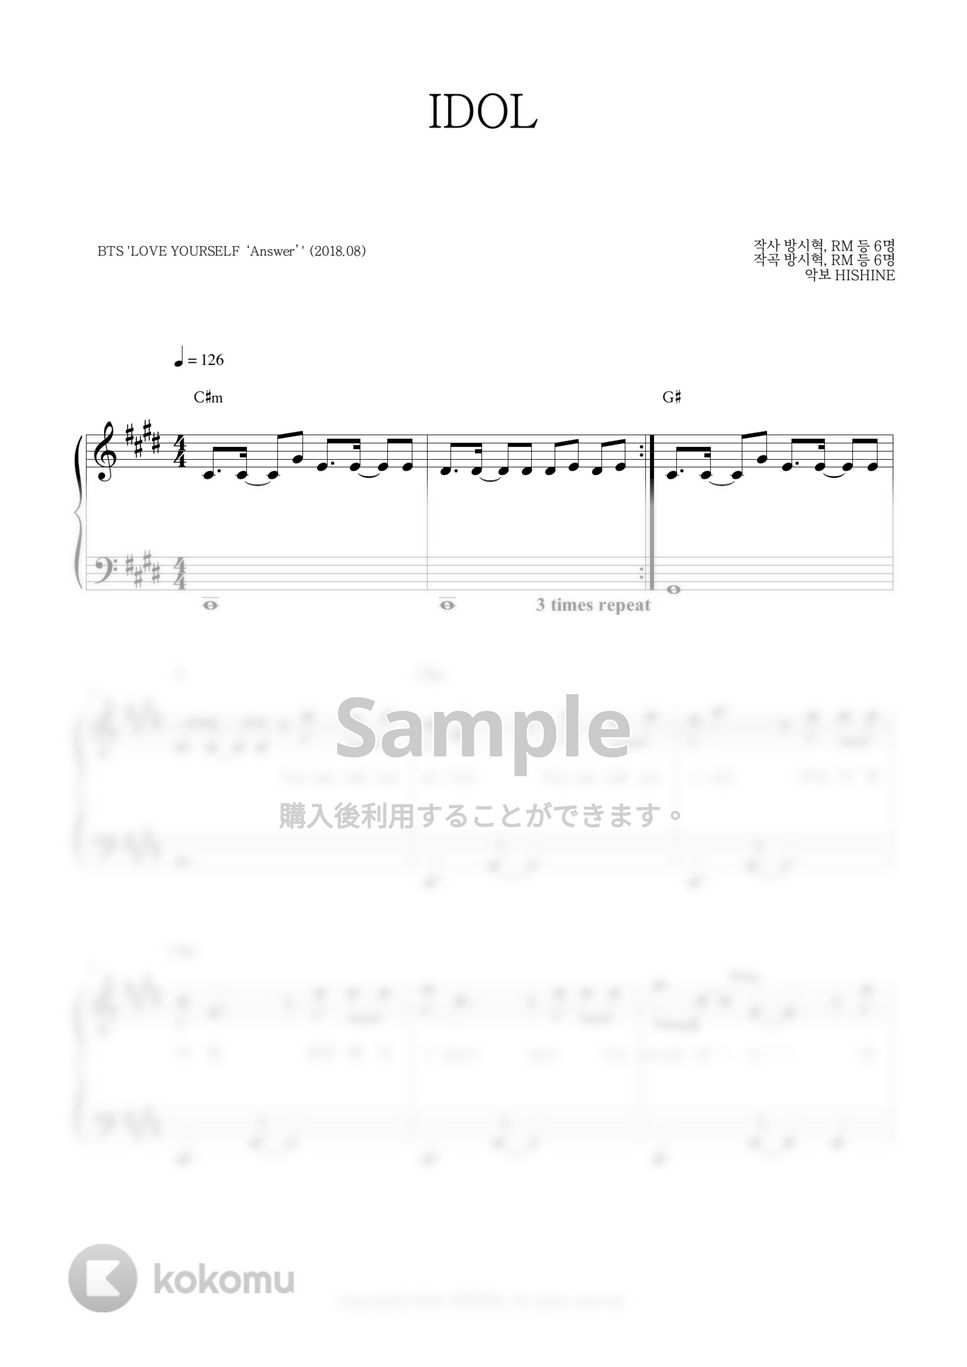 防弾少年団(BTS) - IDOL by HISHINE